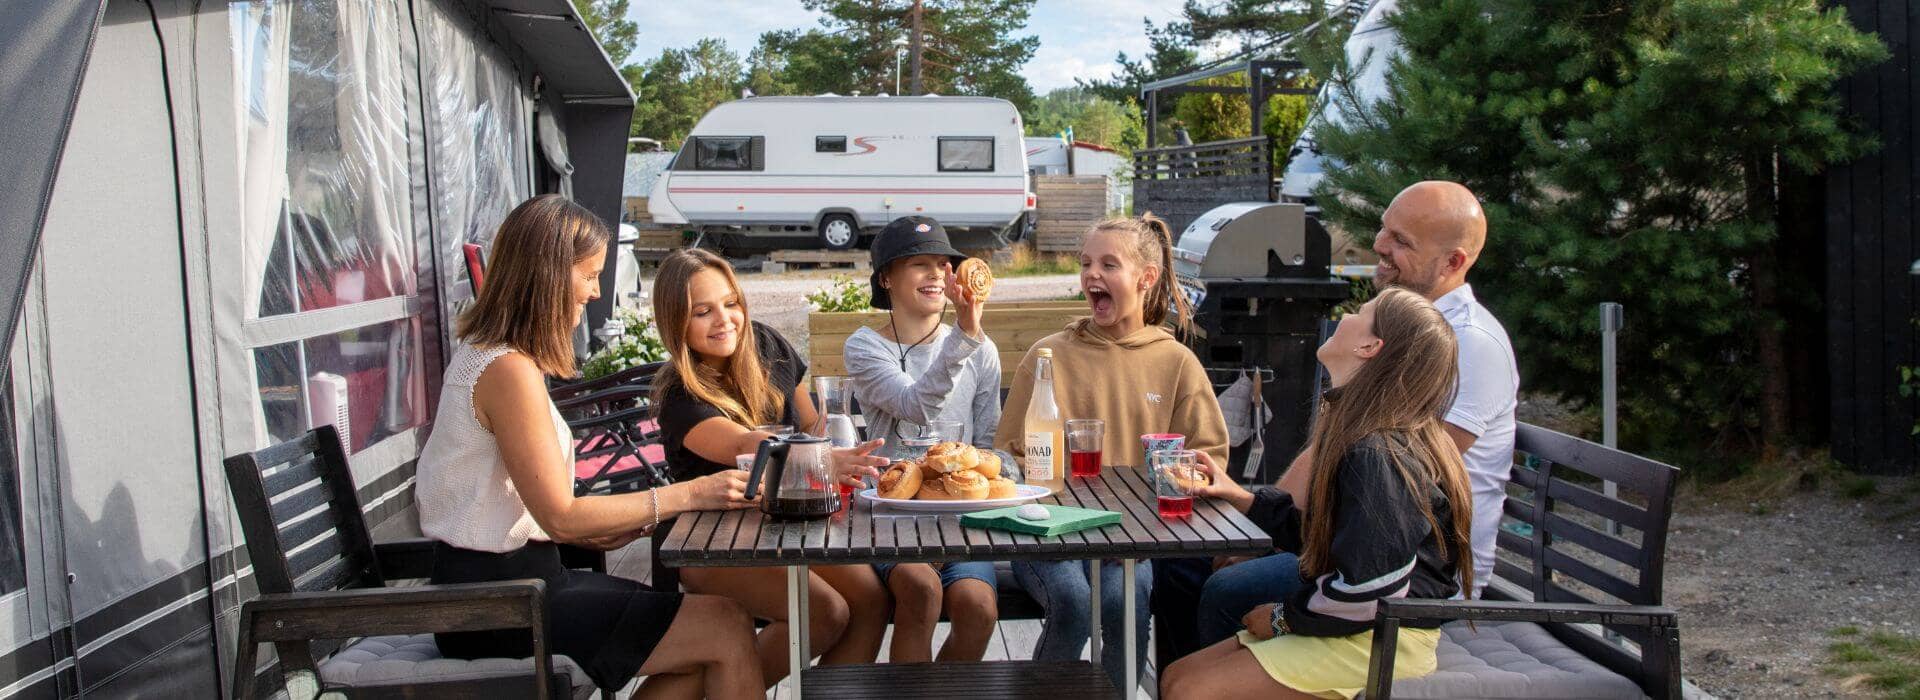 Camping trendar bland unga - Landrins Bil 2